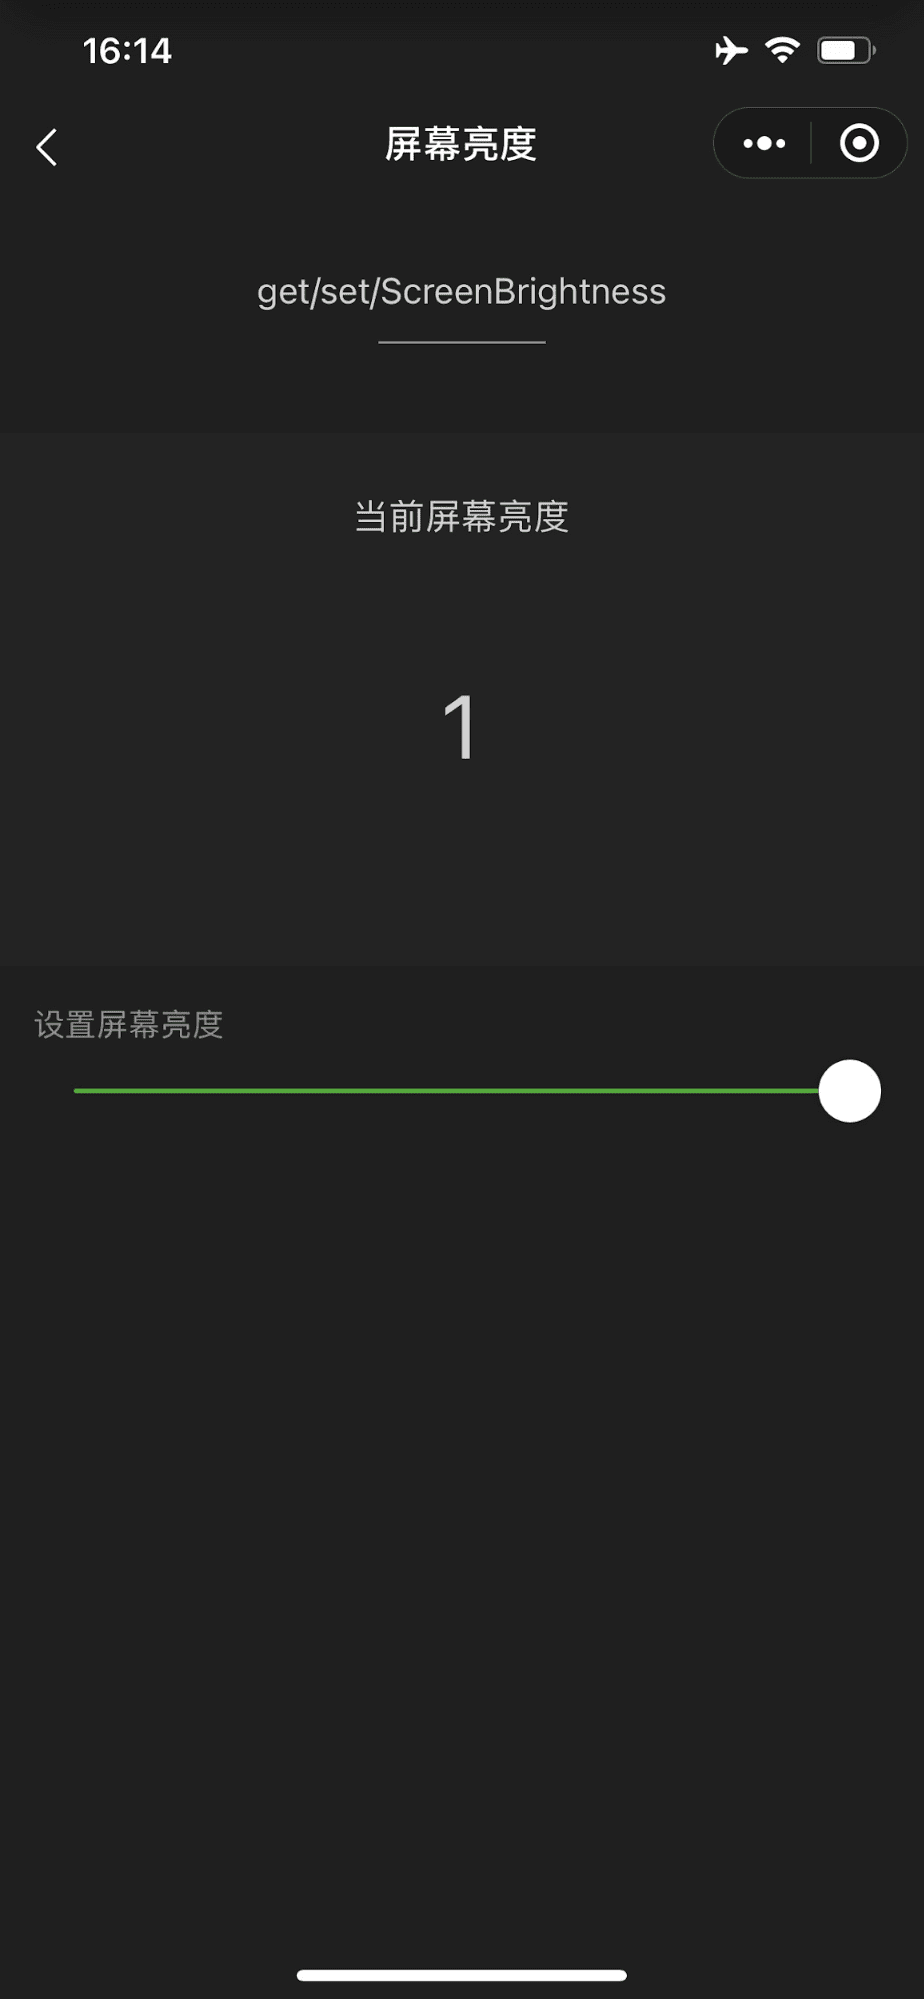 WeChat 示範迷你應用程式顯示了滑桿，用於控制裝置的螢幕亮度。